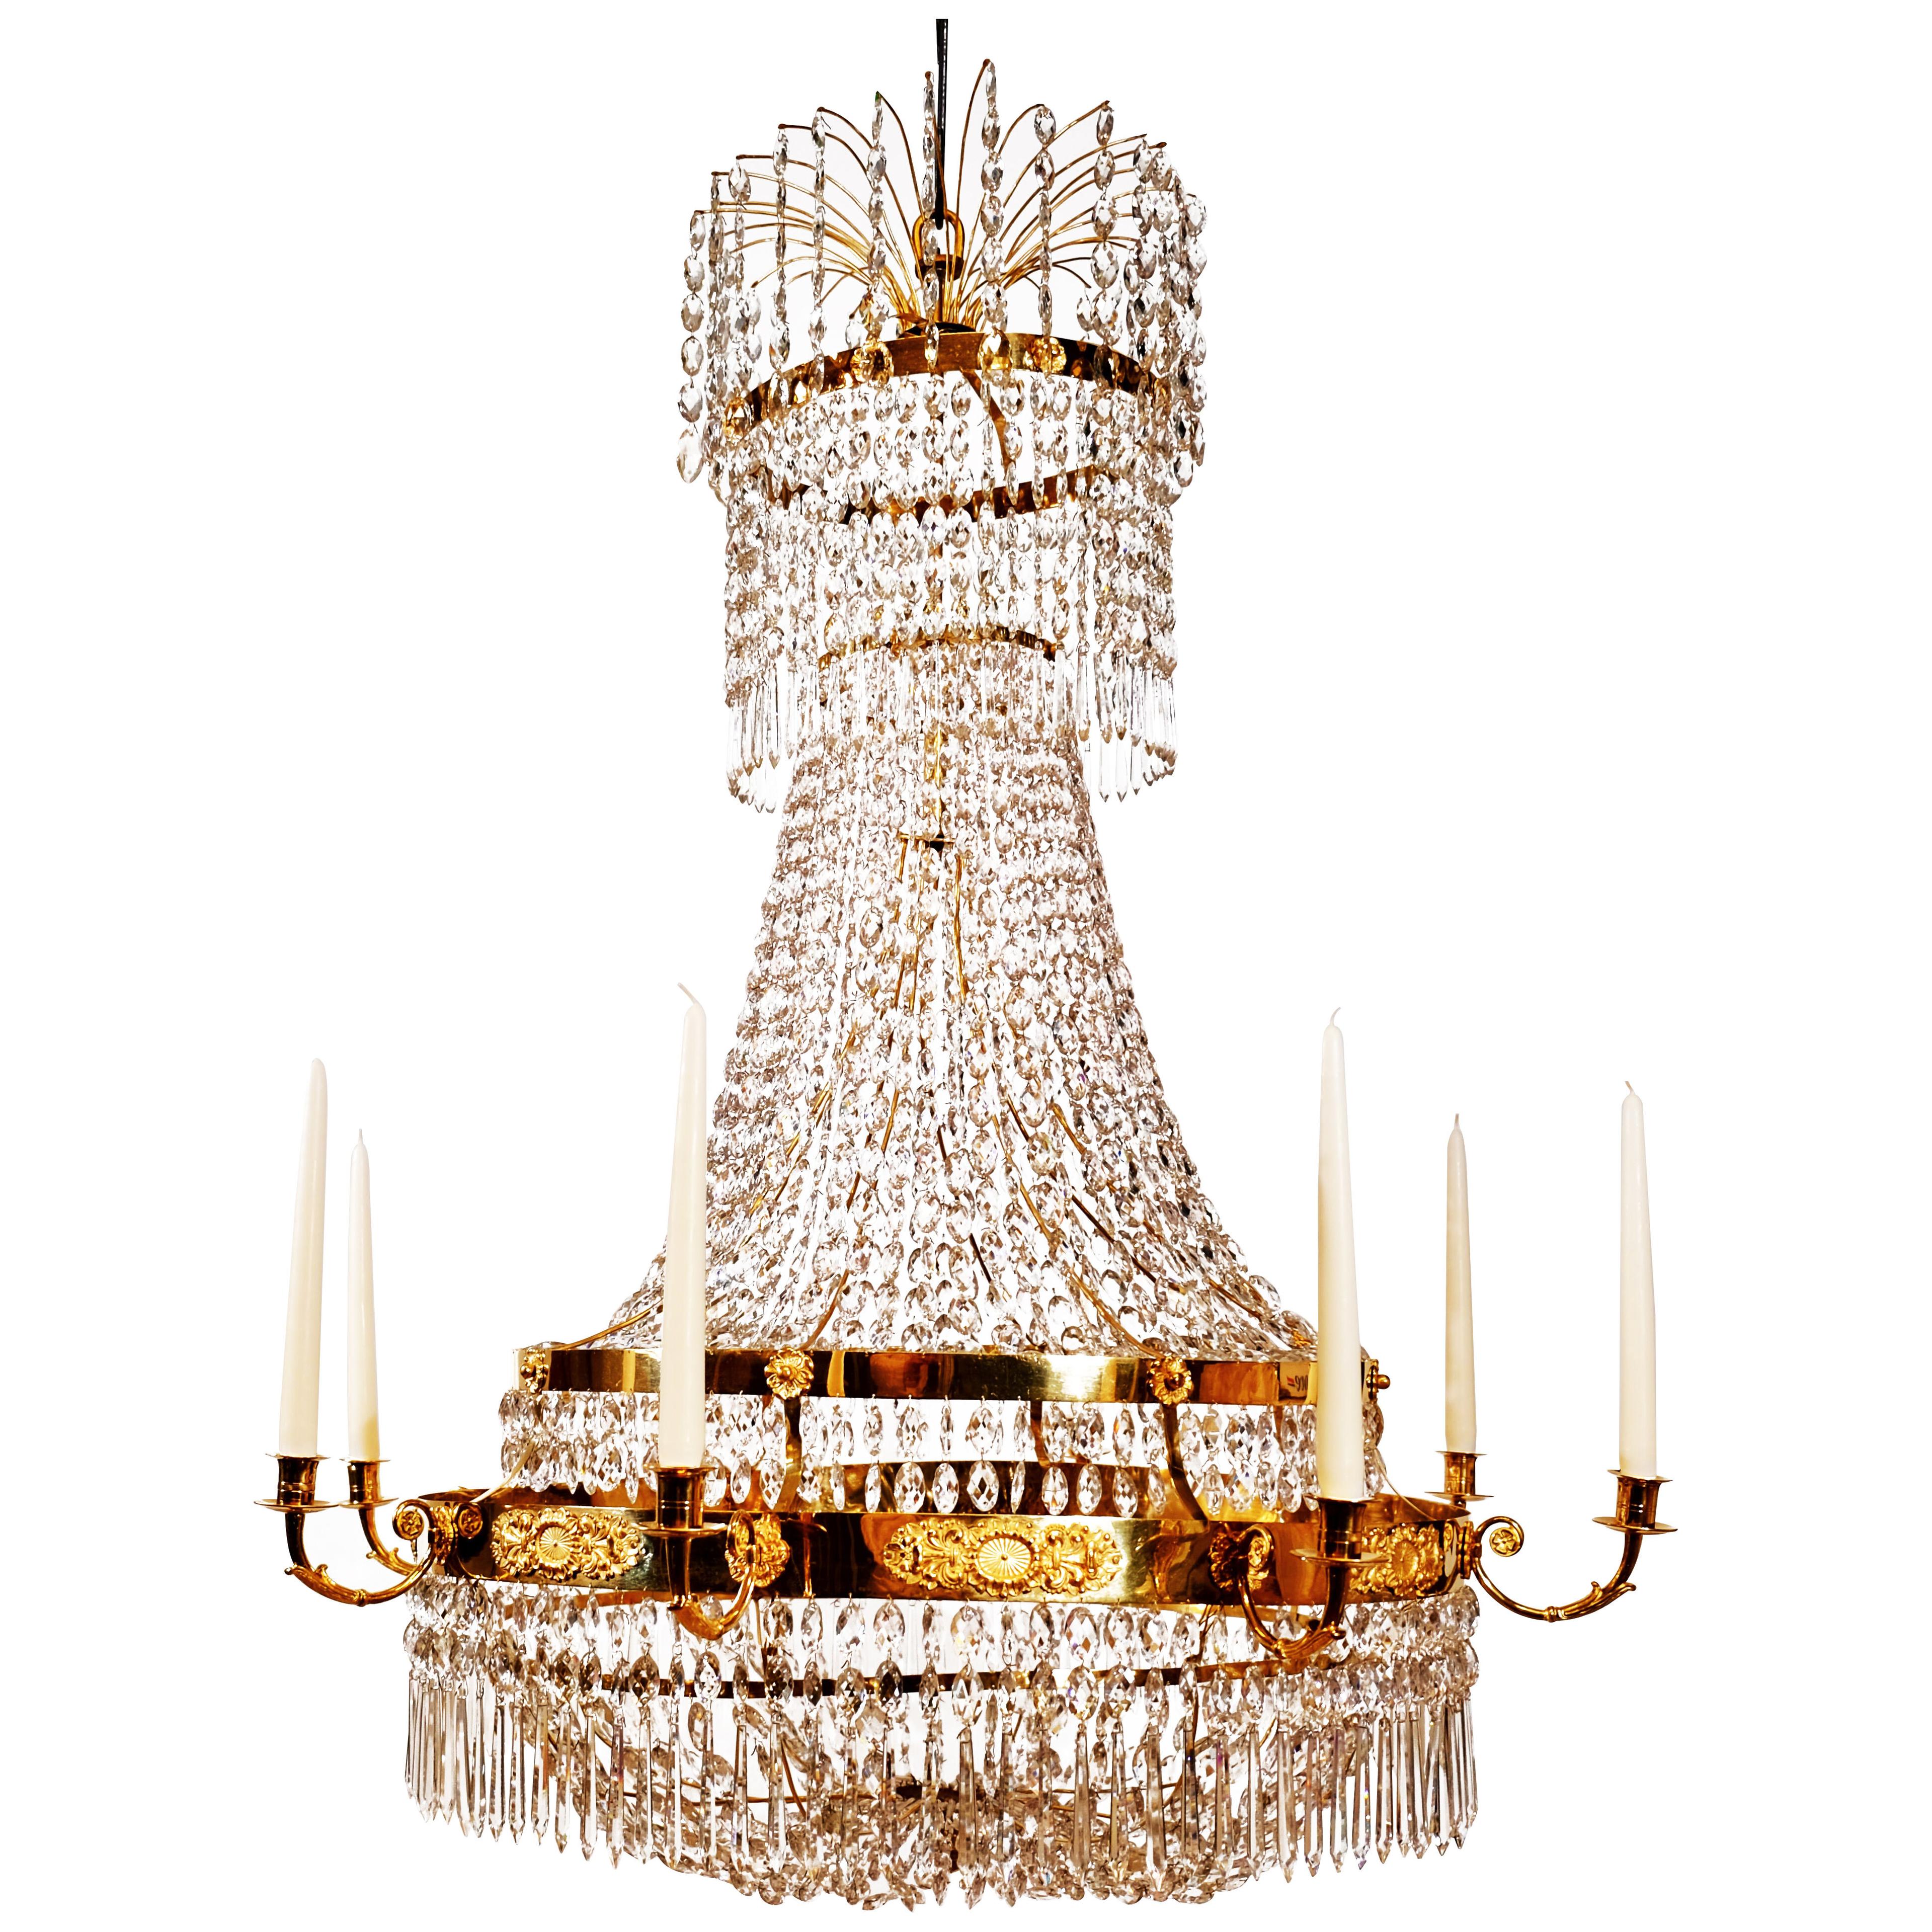 Swedish Empire chandelier made ca 1820